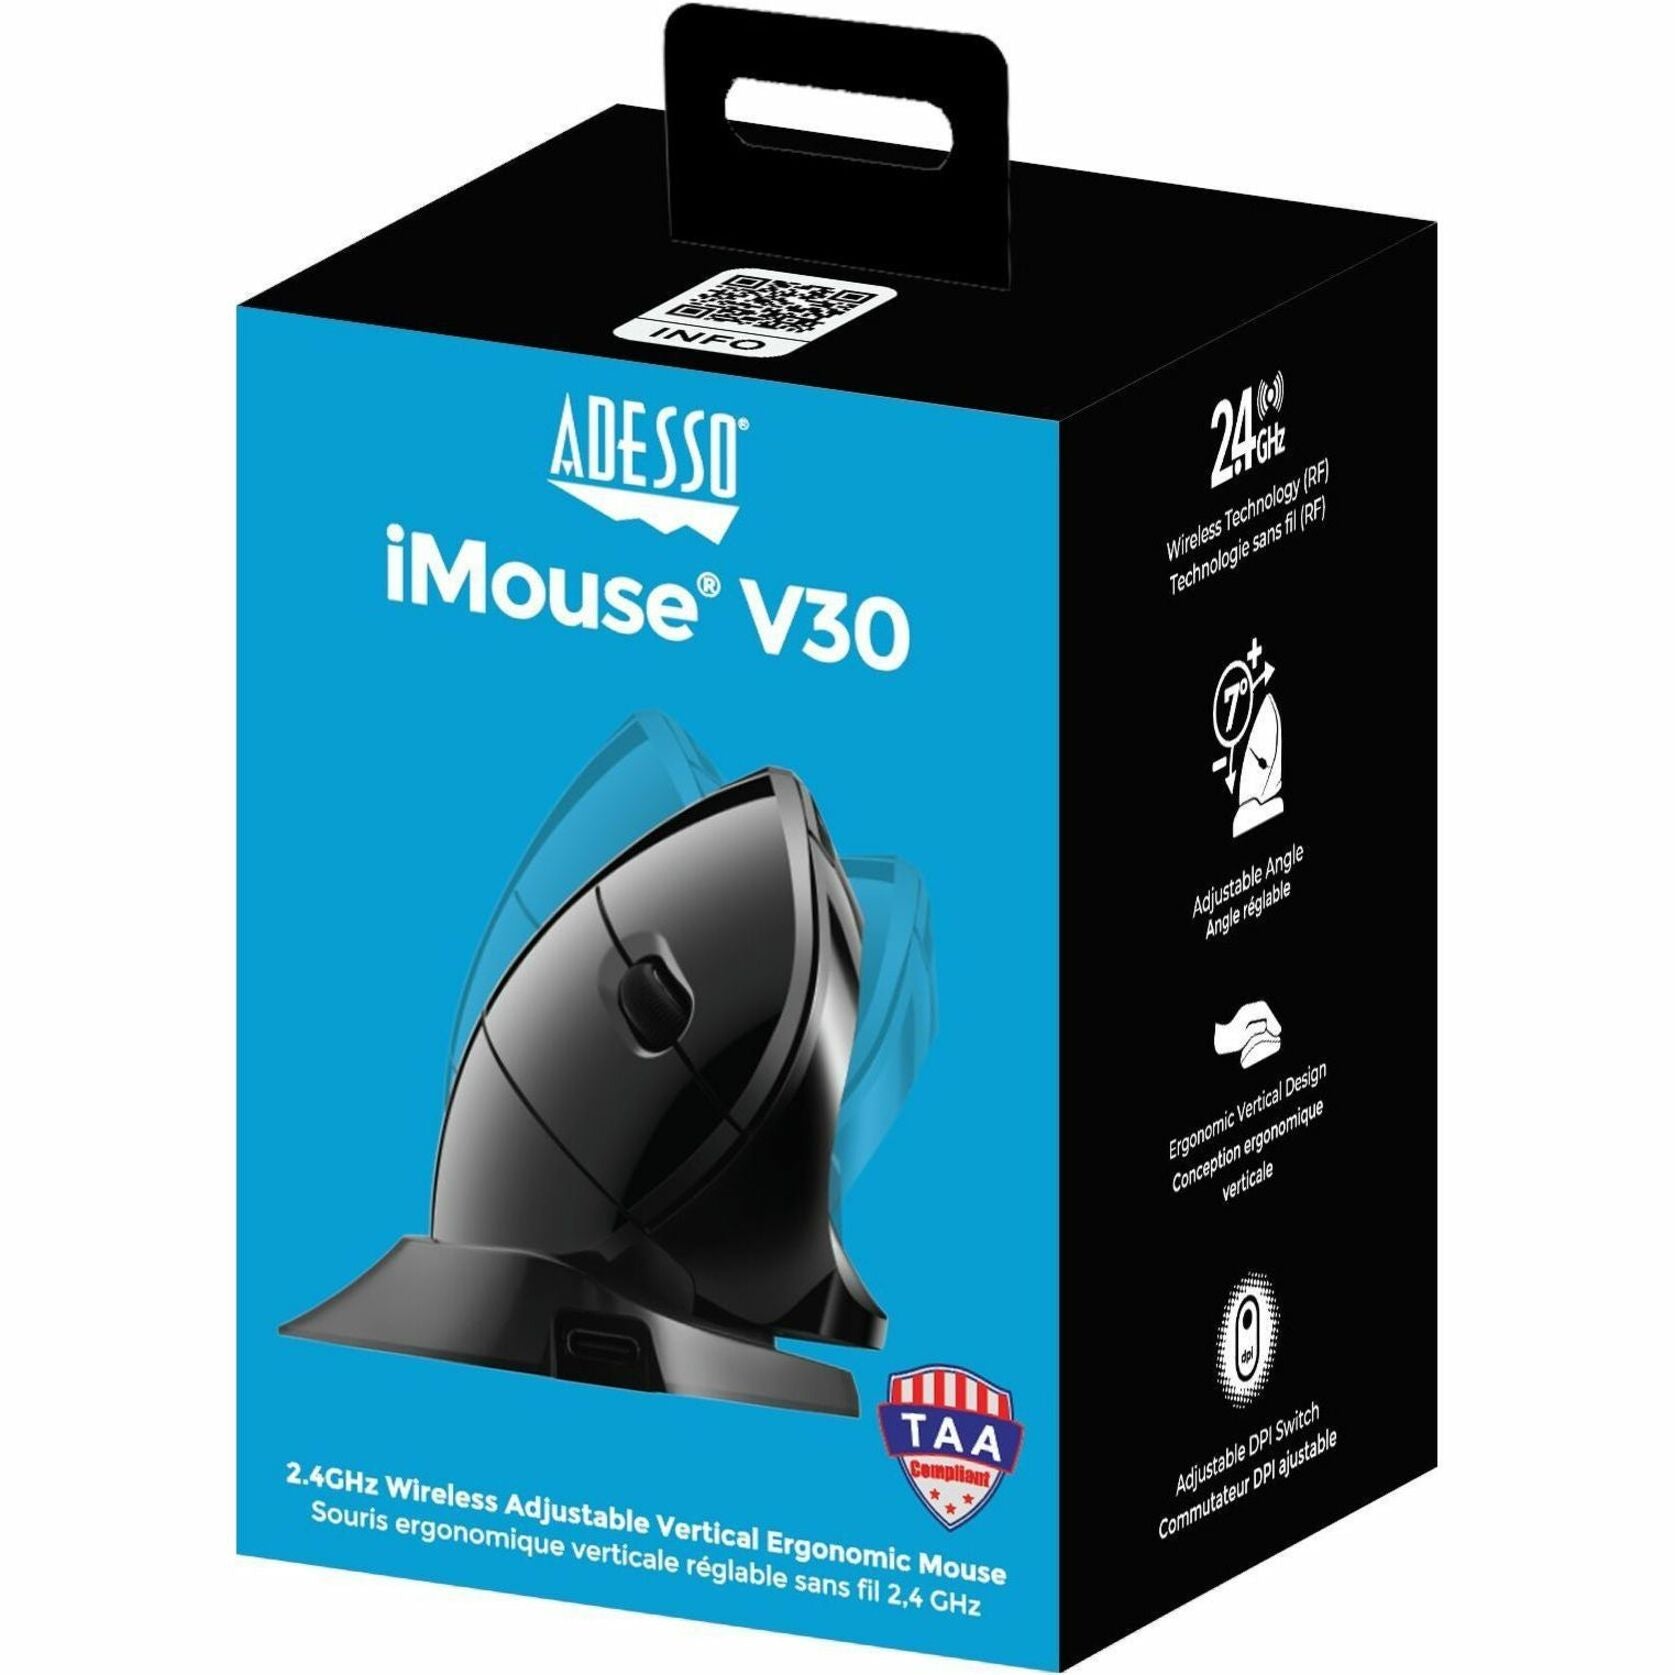 Adesso iMouse V30 Mouse